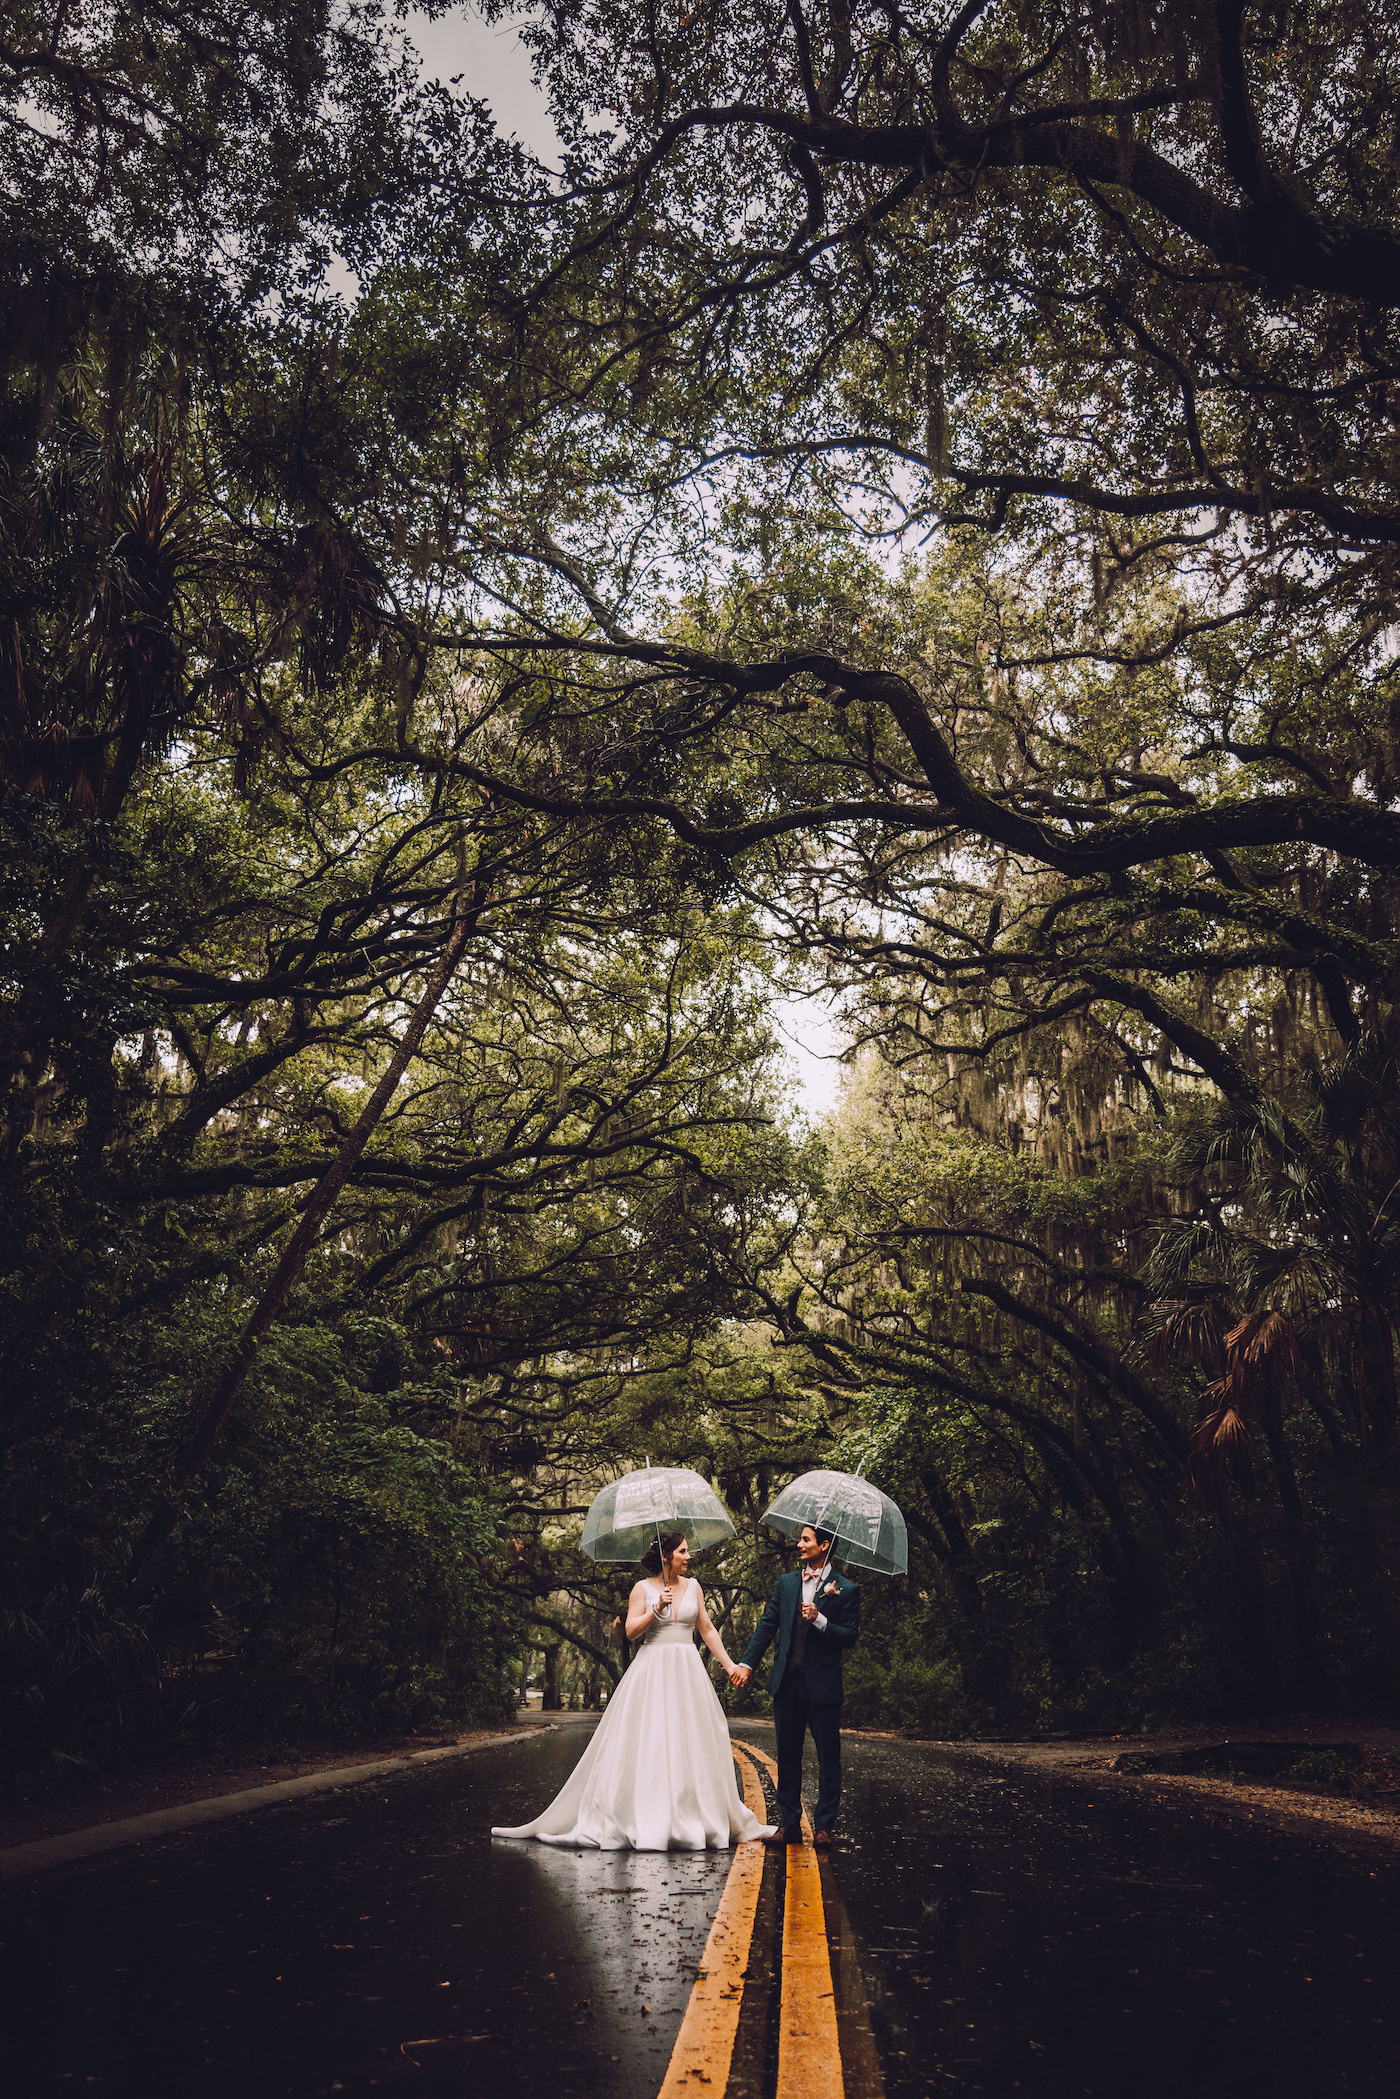 Bride and Groom Rainy Wedding Day Portrait with Clear Umbrellas | St. Petersburg Florida Wedding